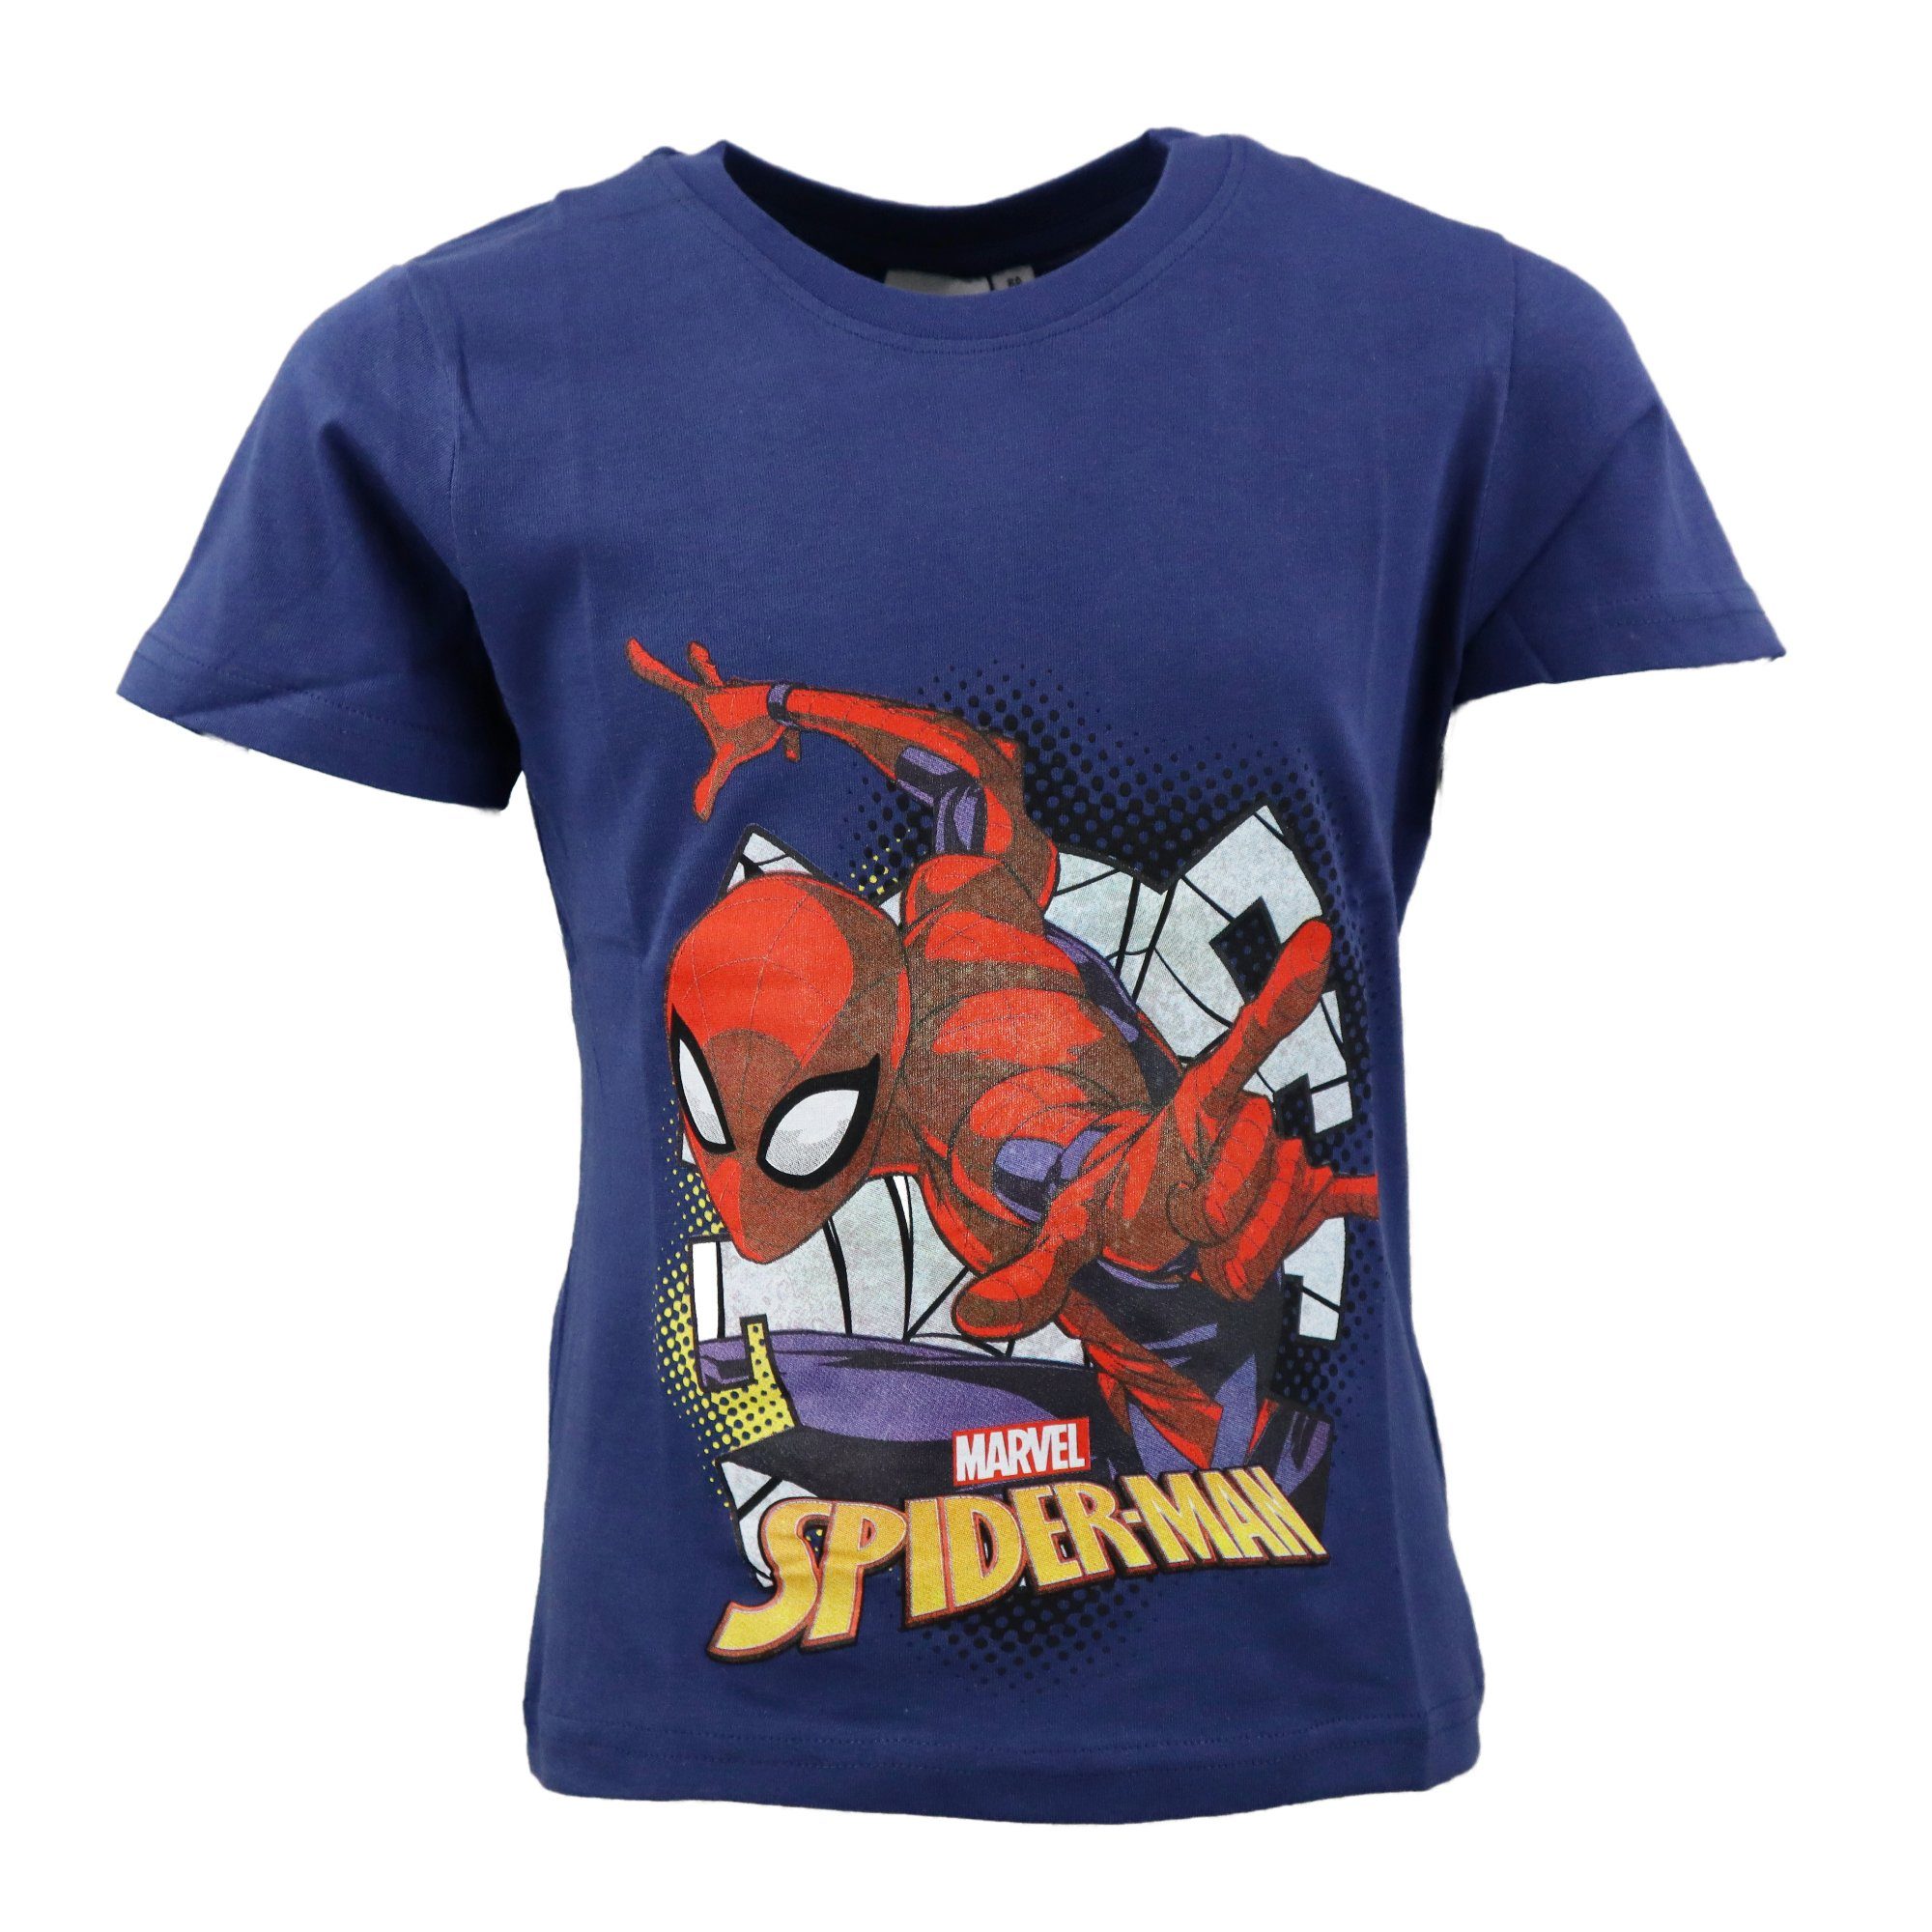 Gr. Baumwolle 98 MARVEL Spiderman Print-Shirt 100% bis Shirt kurzarm T-Shirt Jungen Kinder 128, Dunkelblau